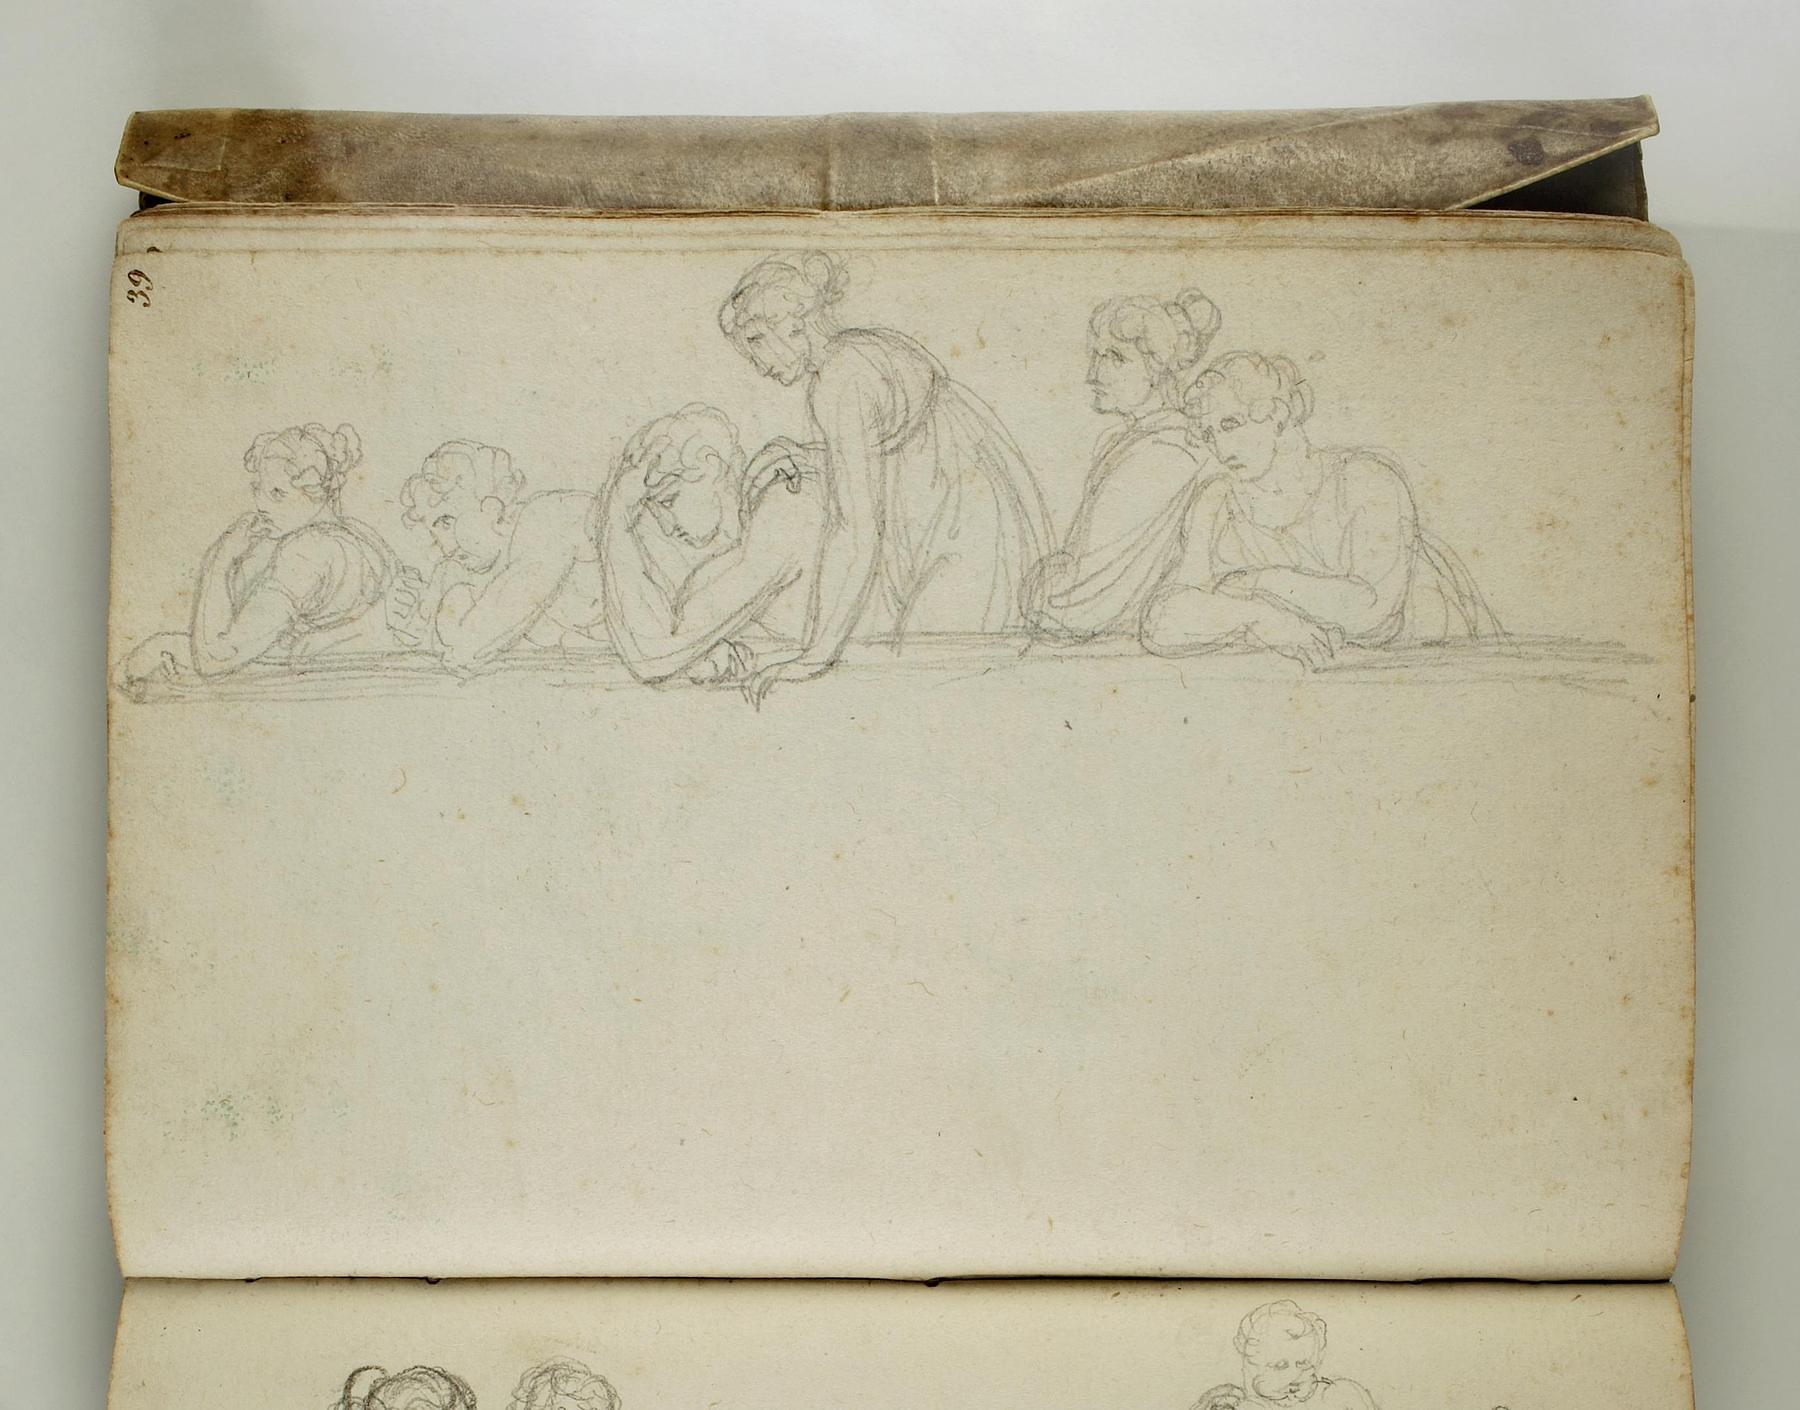 Six figures gazing across a wall, C562,39r